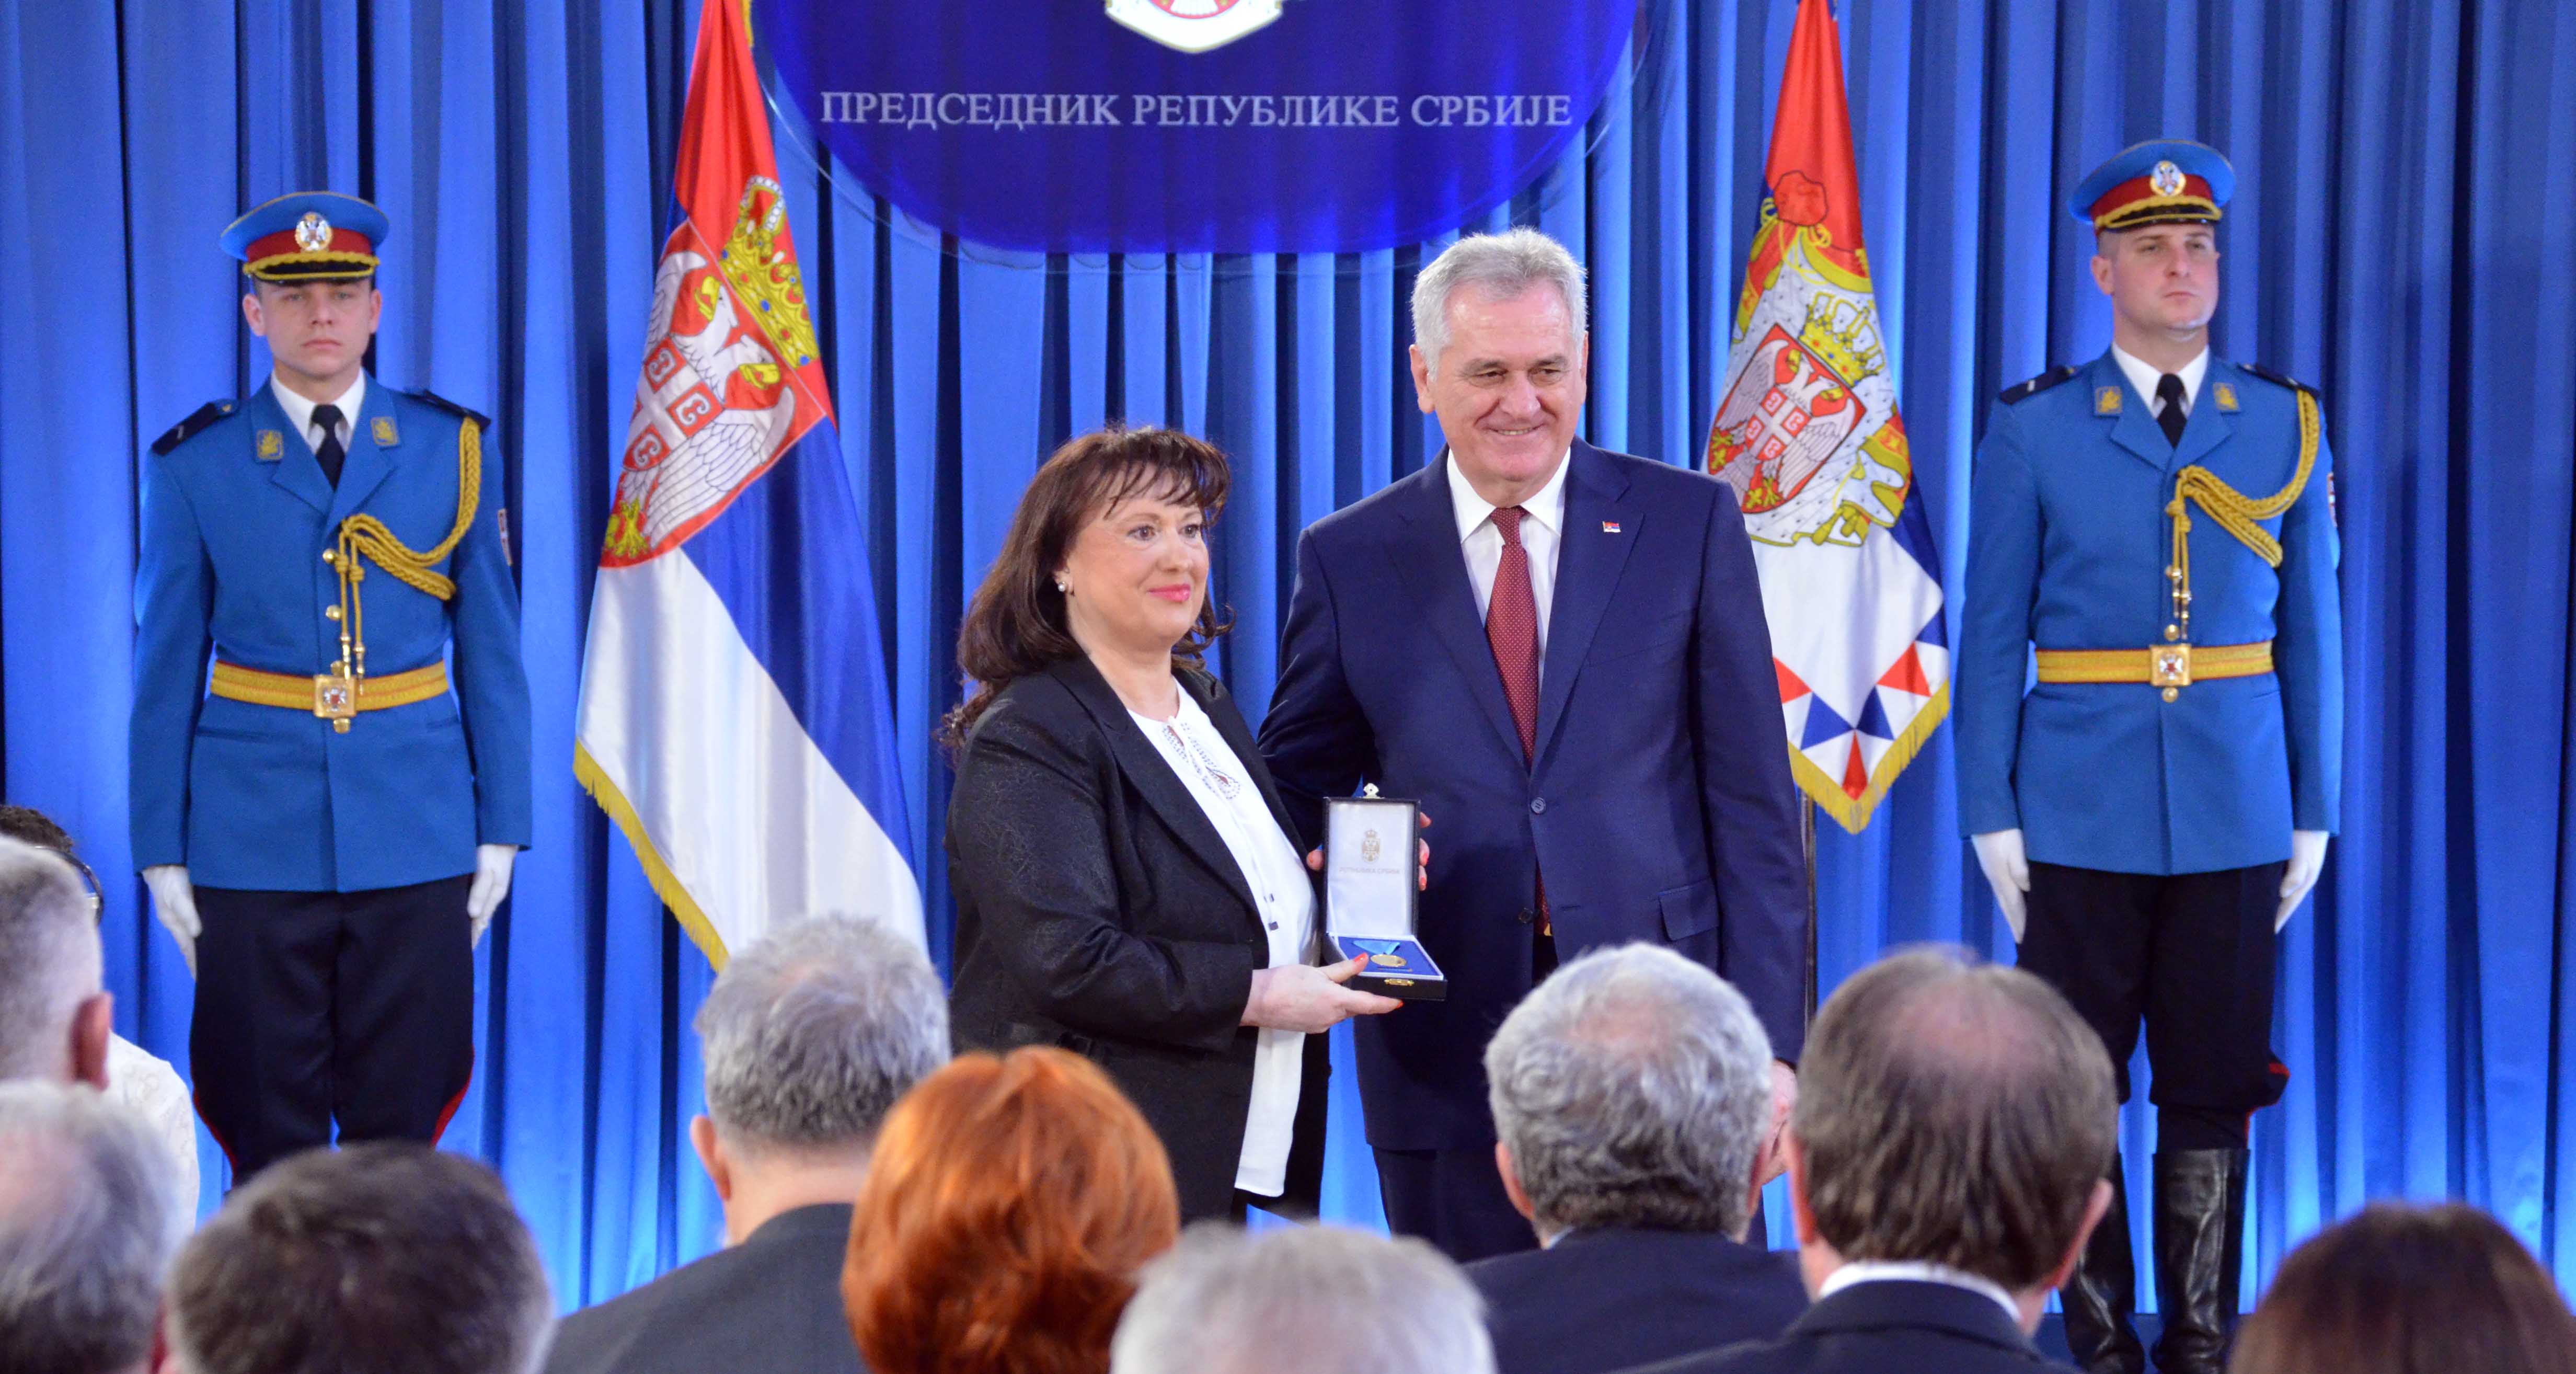 Predsednik Nikolić odlikovao zlatanom medaljom pripadnike Ministarstva unutrašnjih poslova